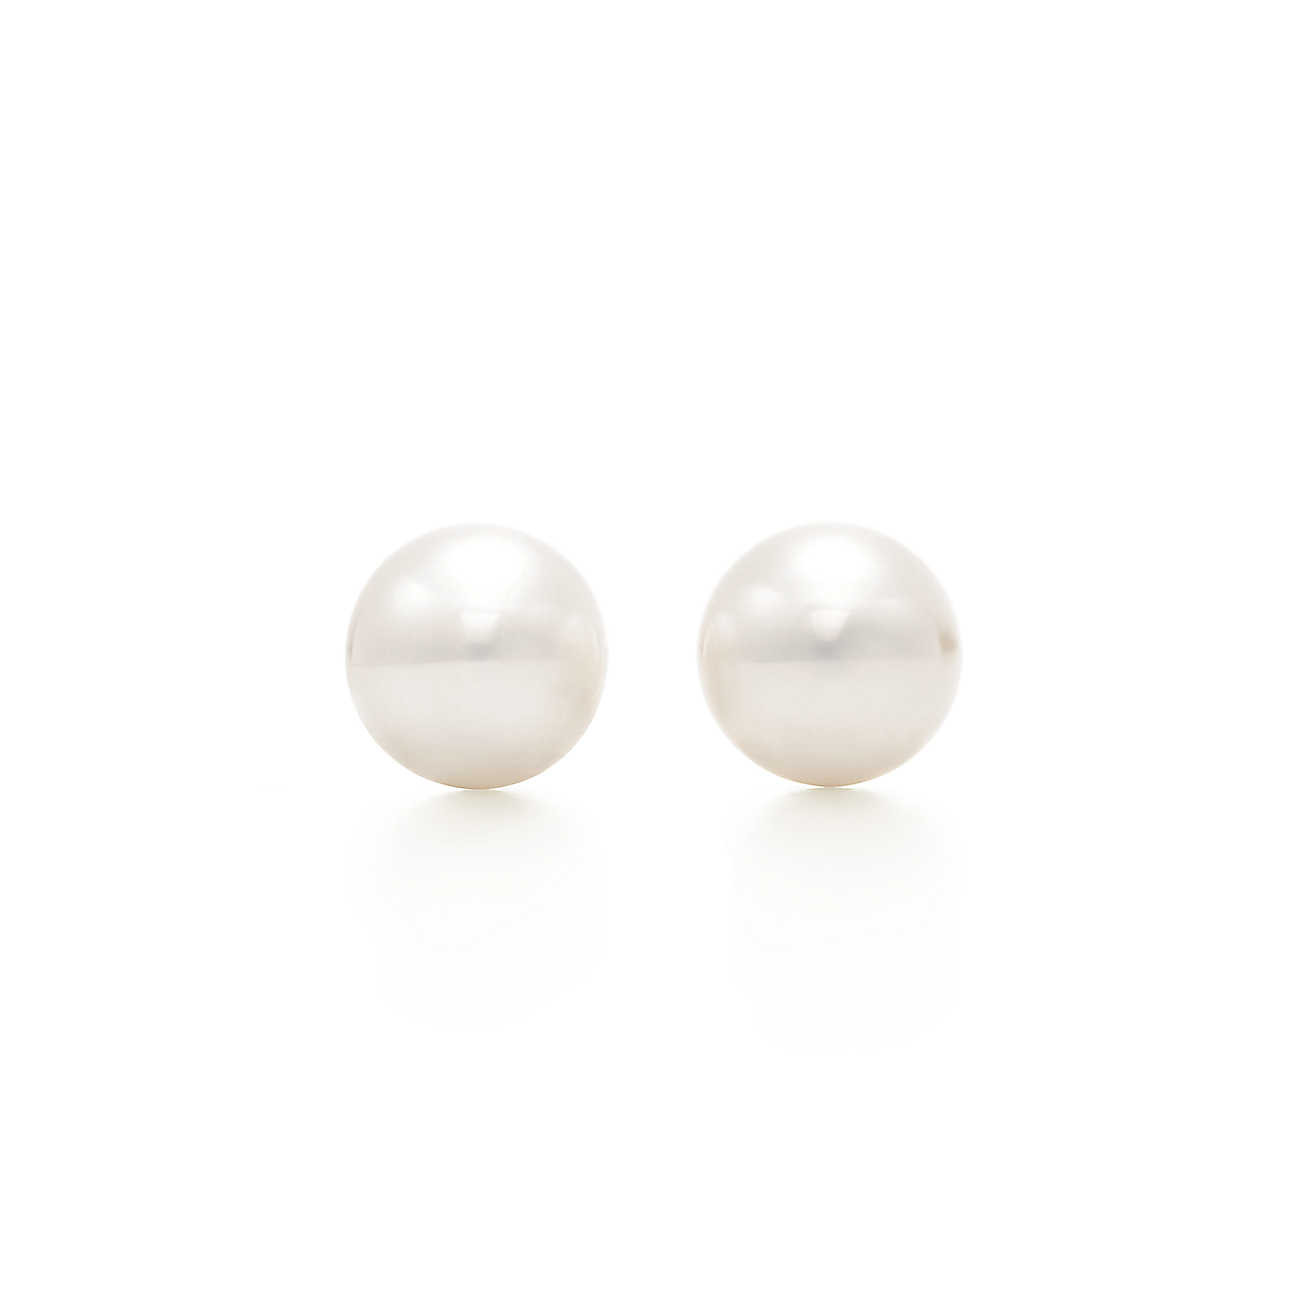 Tiffany Pearl Earrings
 Earrings in sterling silver with freshwater cultured